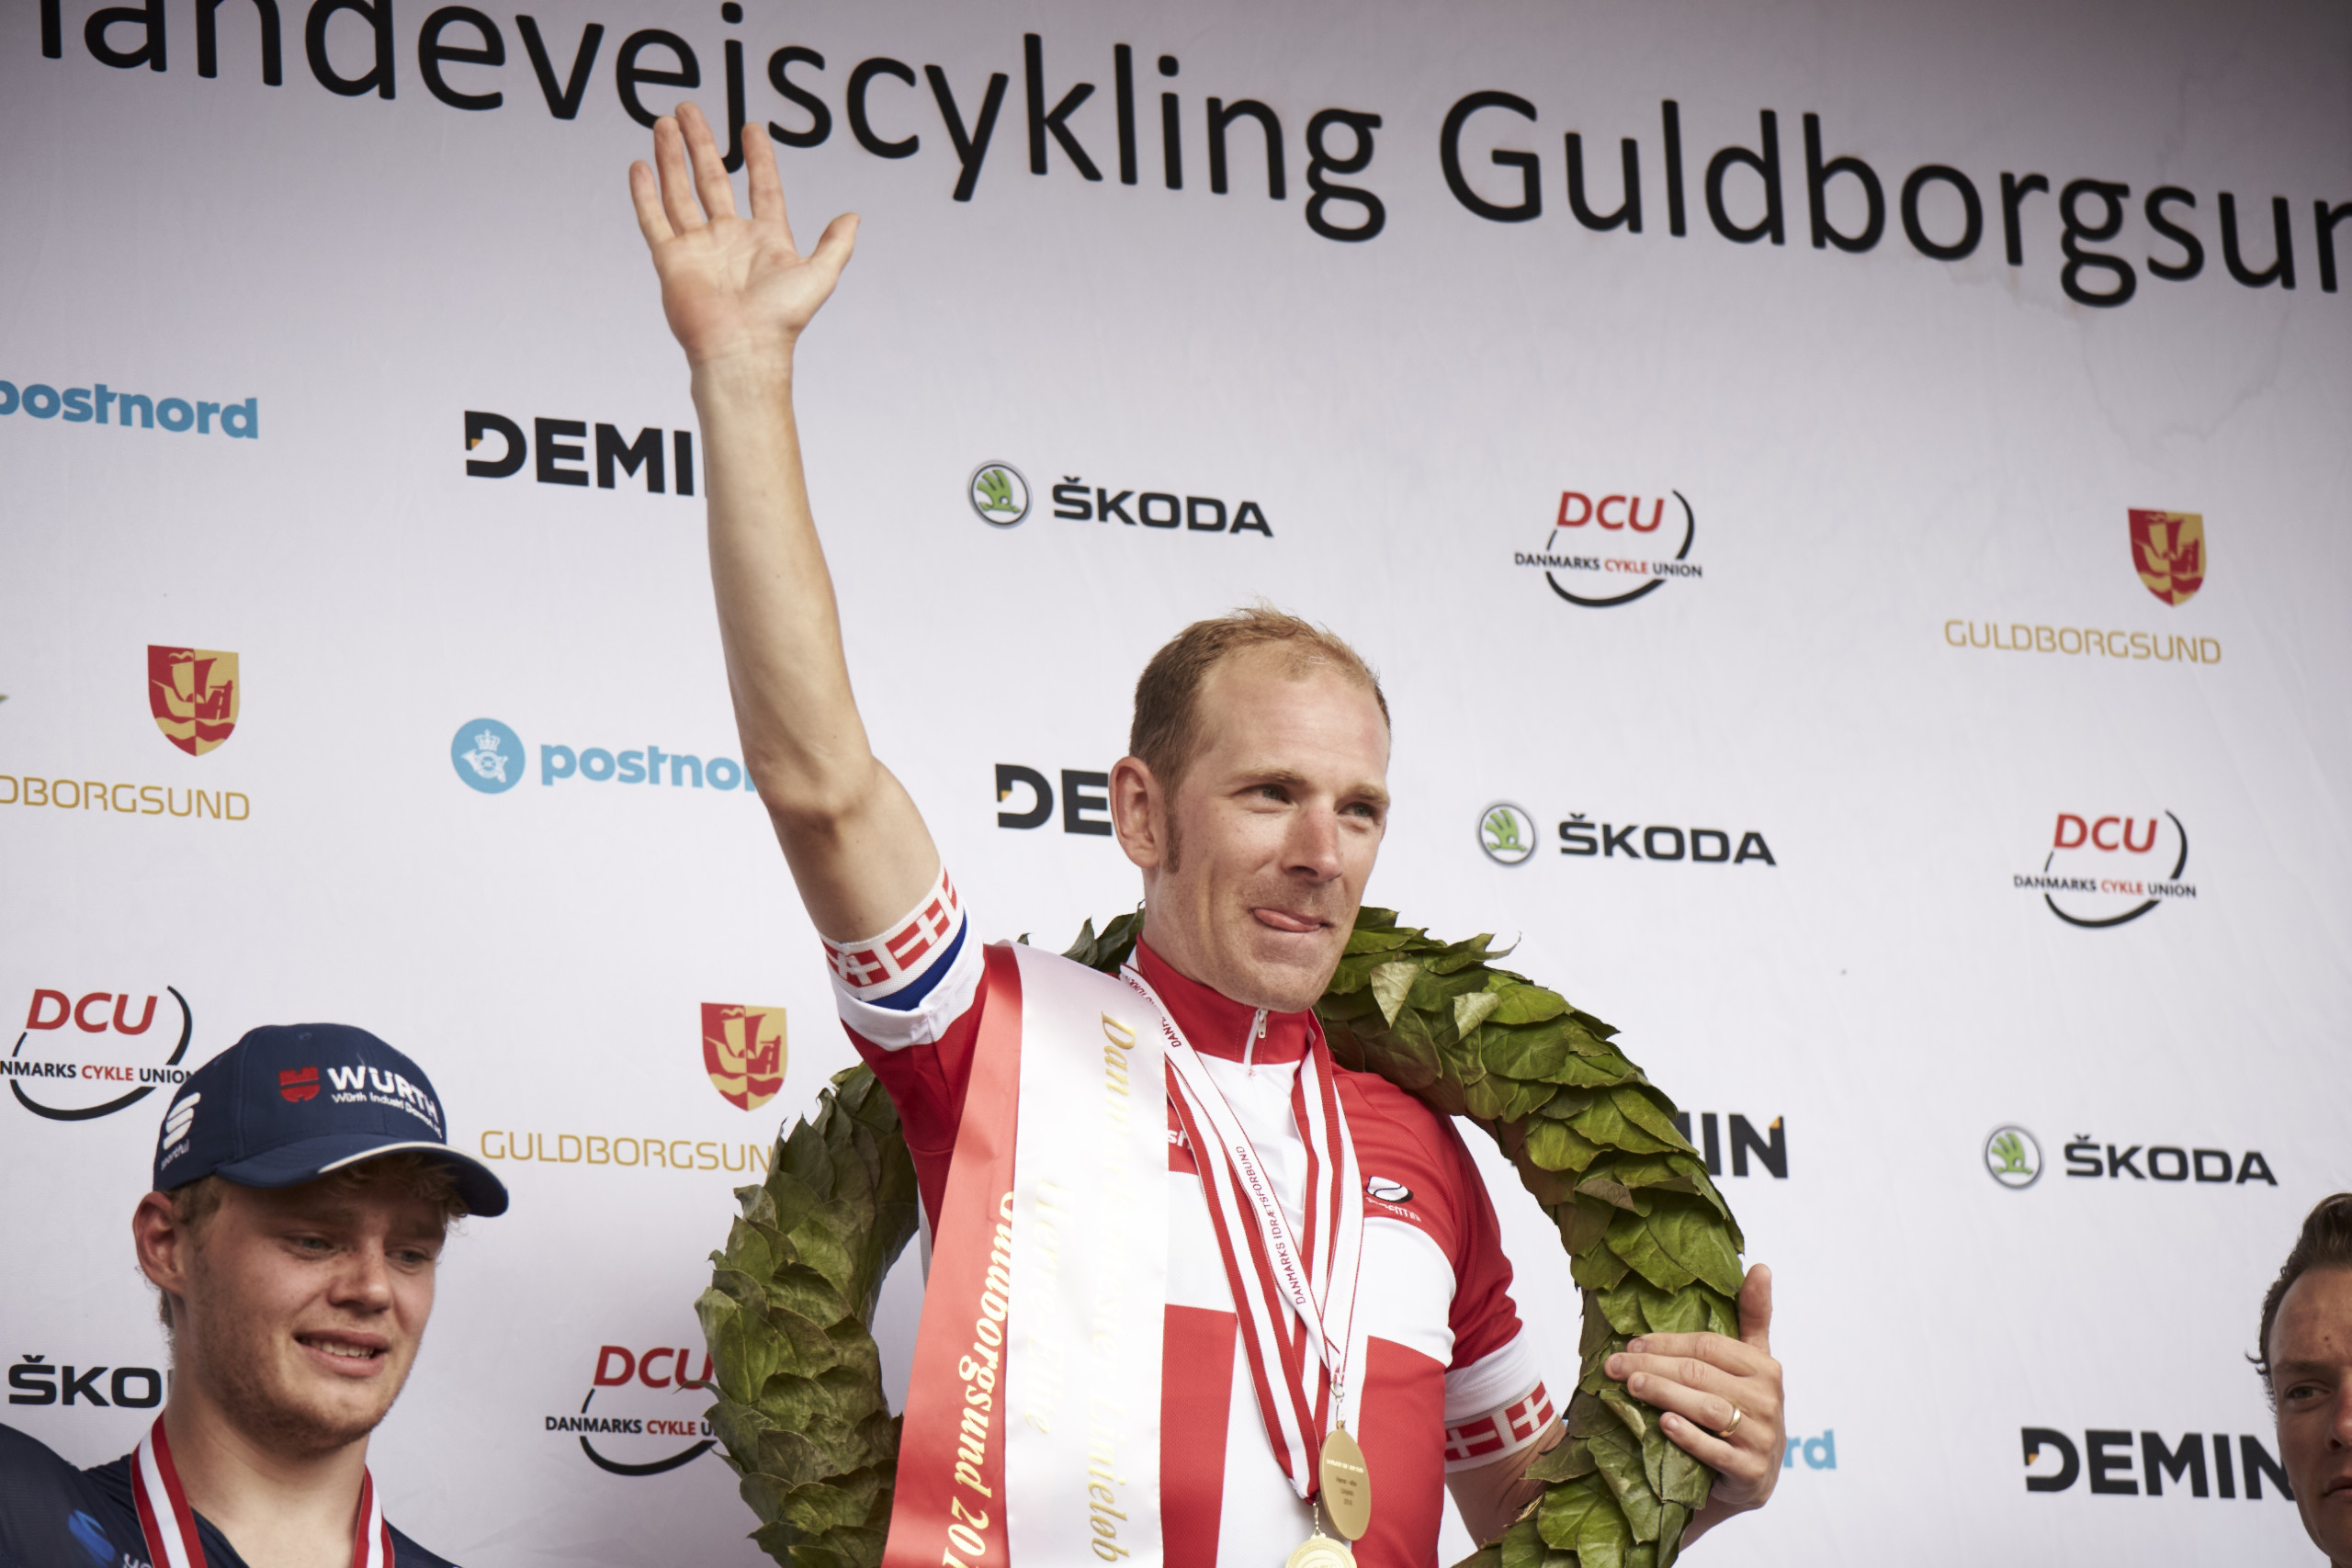 DM landevej elite | CyclingWorld.dk